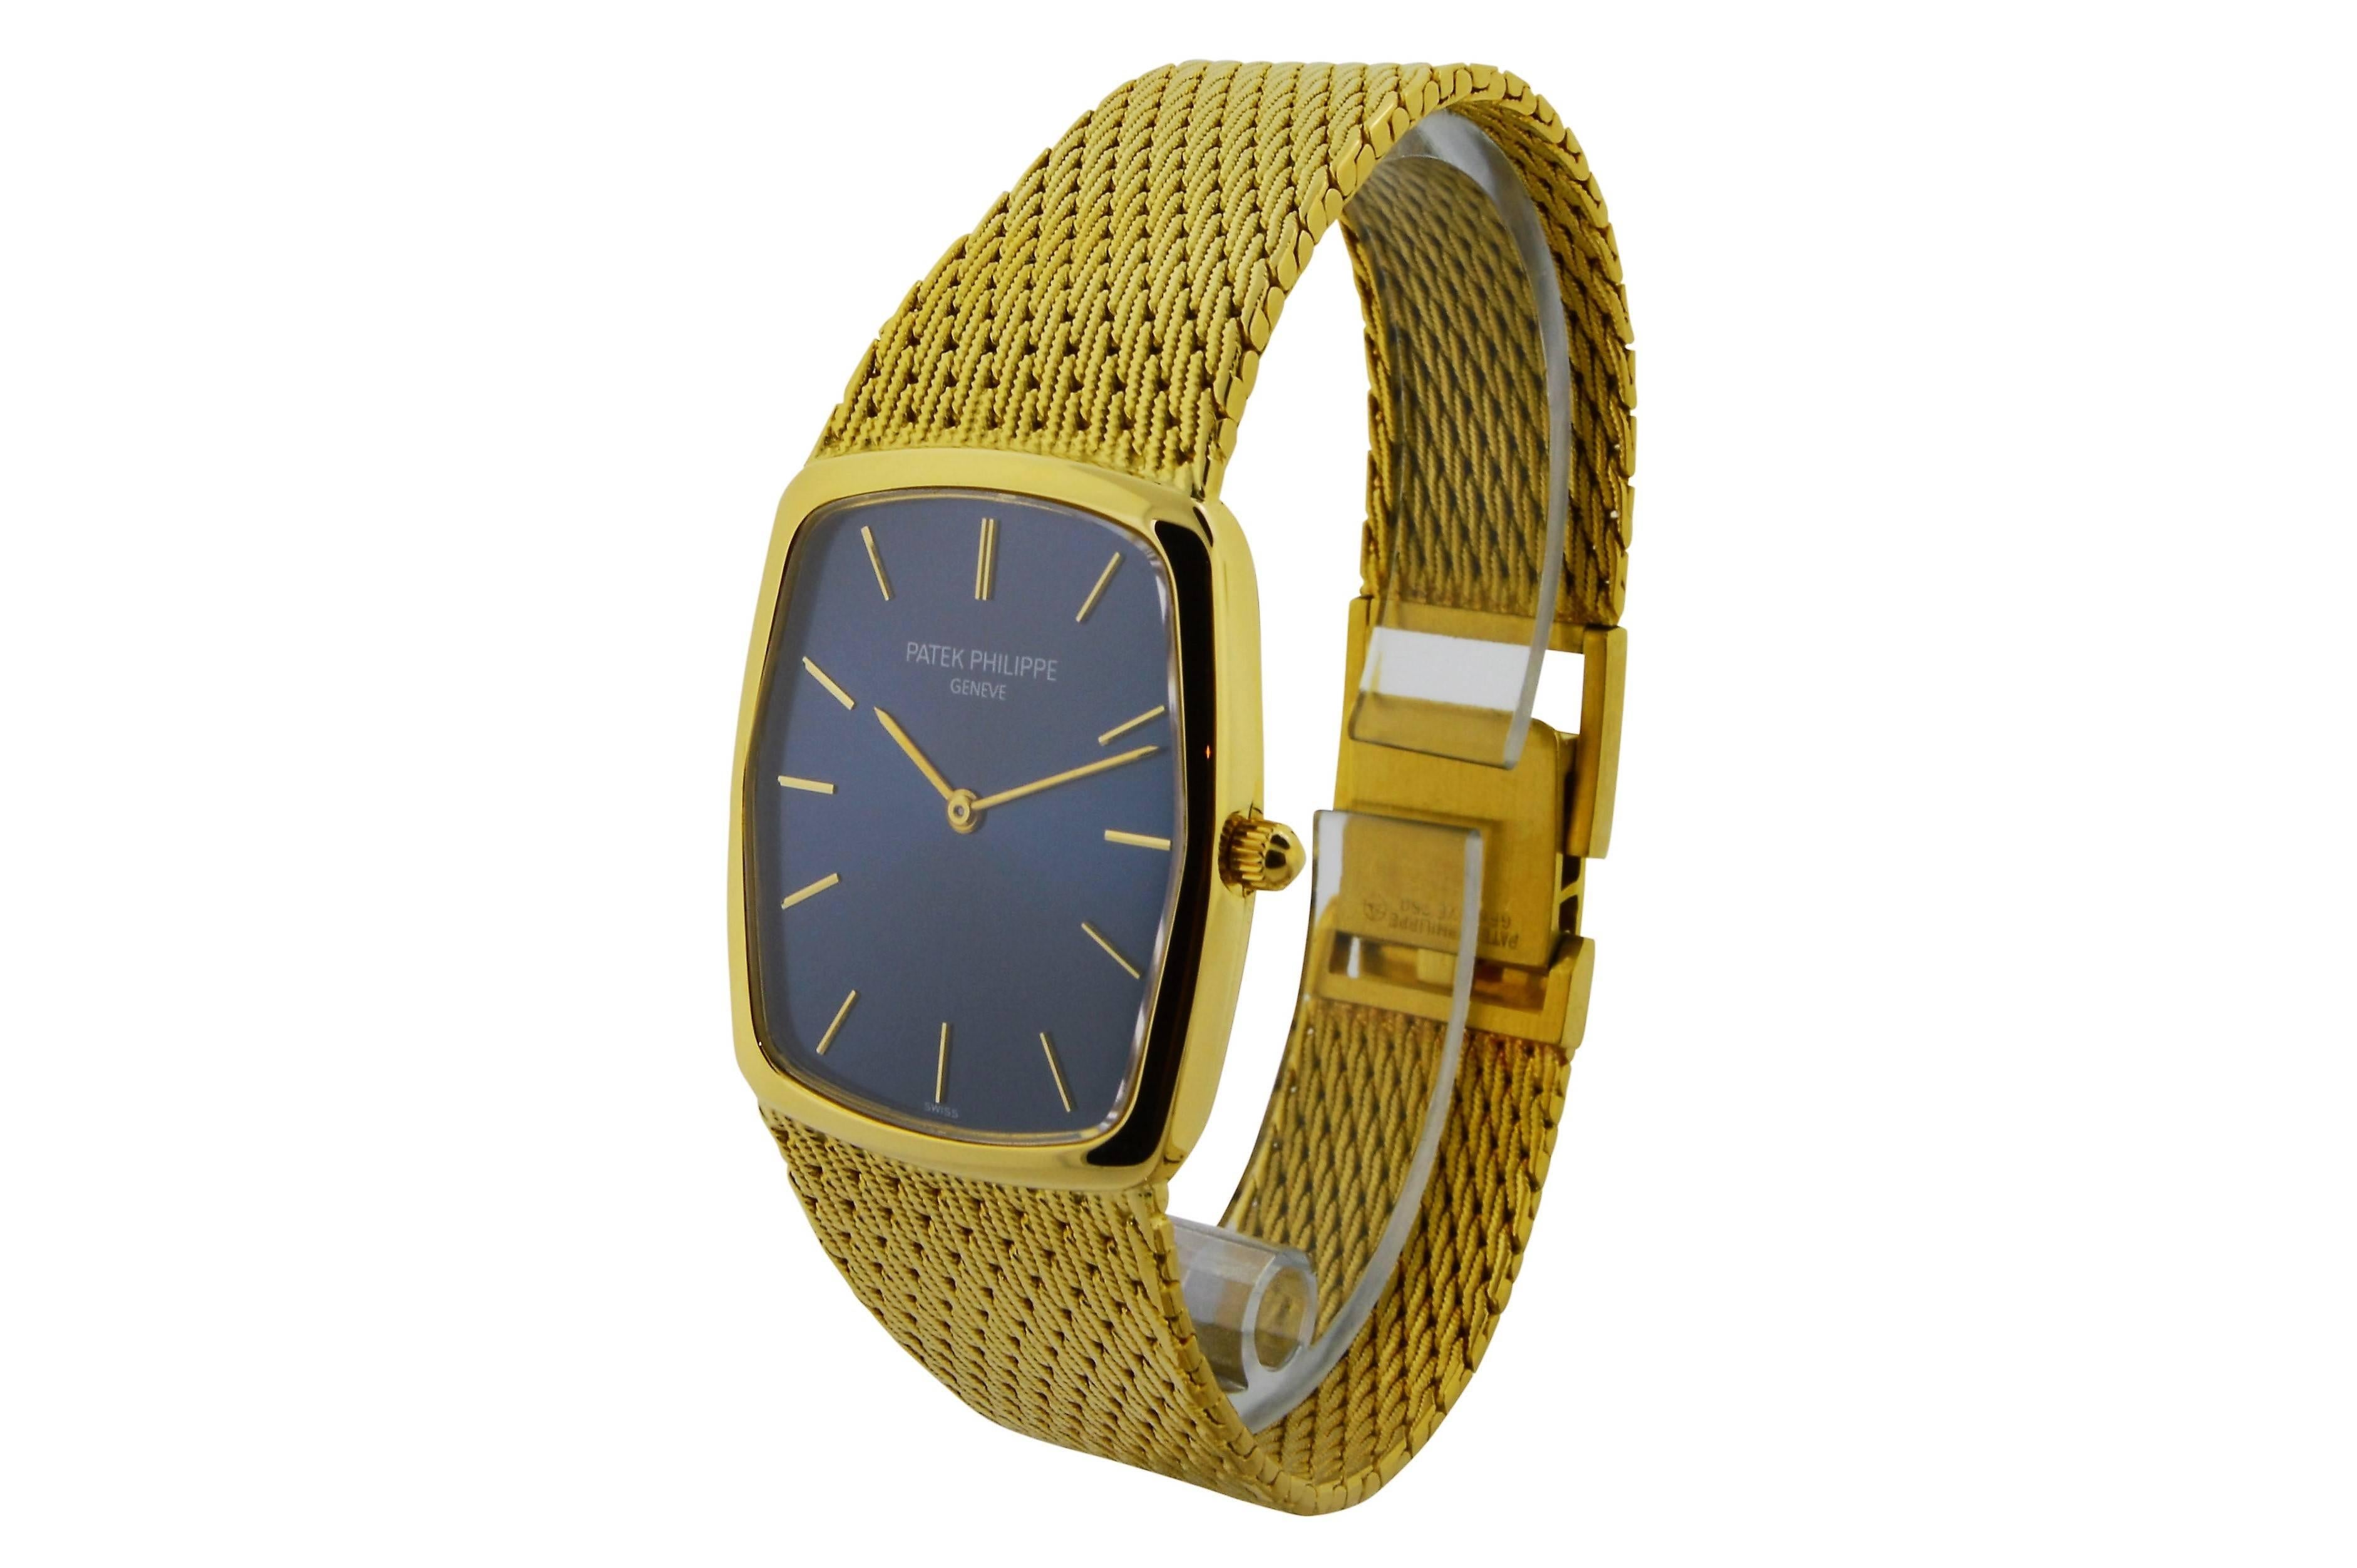 FACTORY / HOUSE: Patek Philippe Watch Company
STYLE / REFERENCE: Men's Yellow Gold Bracelet Watch, Ref. 3556-1
MOVEMENT / CALIBER: Quartz, E26
DIAL / HANDS:Original, Blue, Solid Gold Baton Markers, Solid Gold Baton Hands
DIMENSIONS: 32mm X